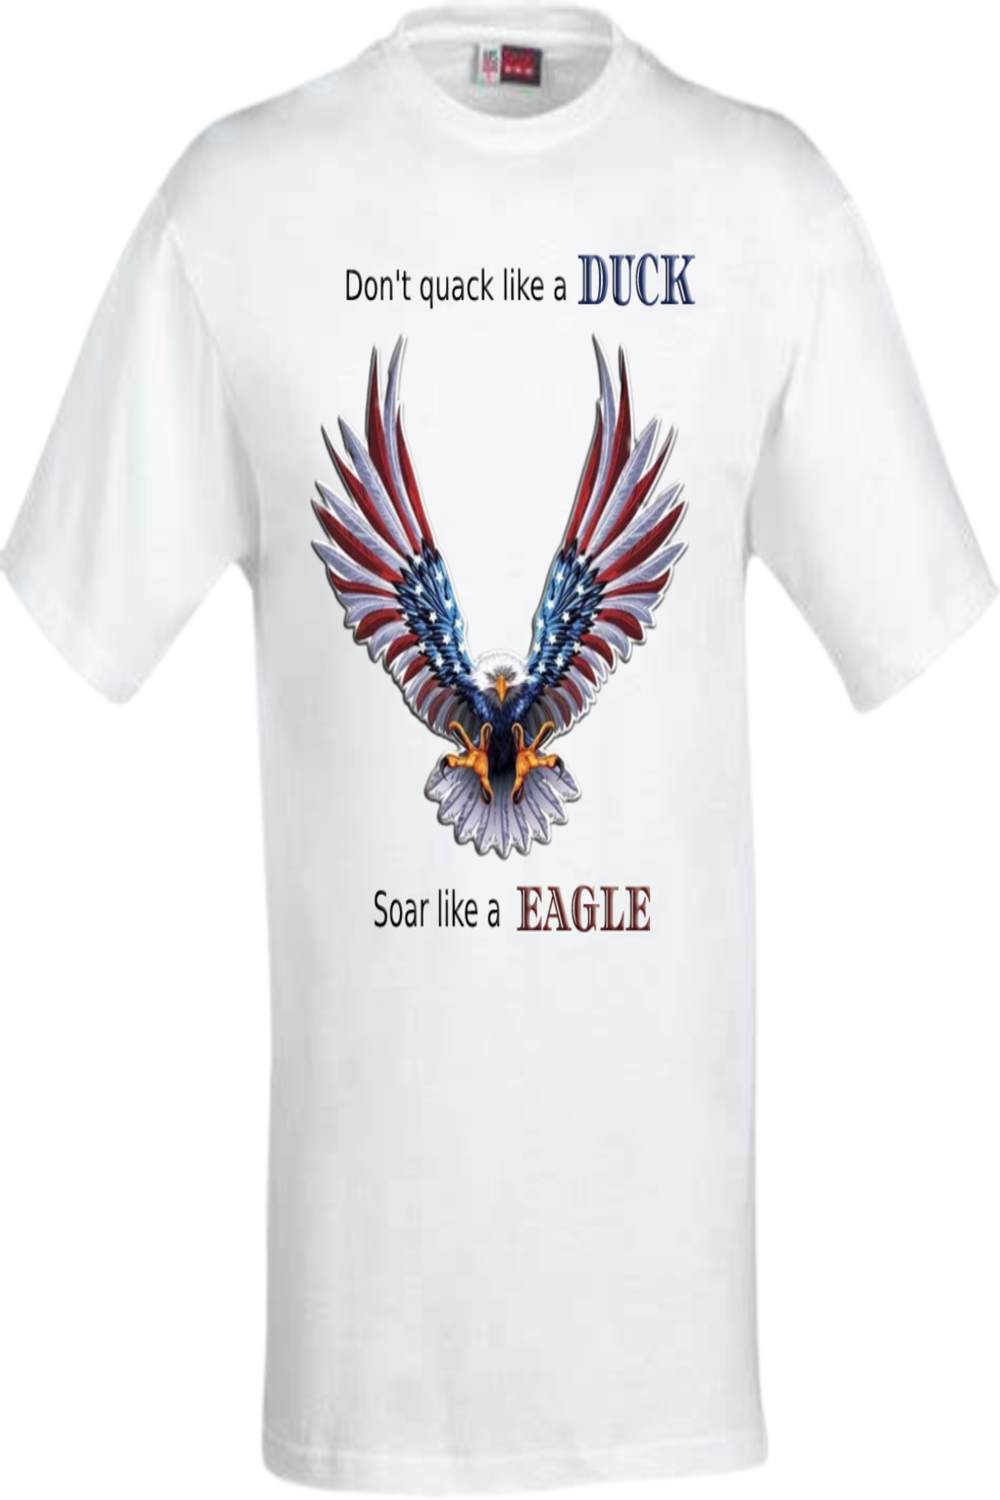 Eagle T-shirt Designs Pinterest image.